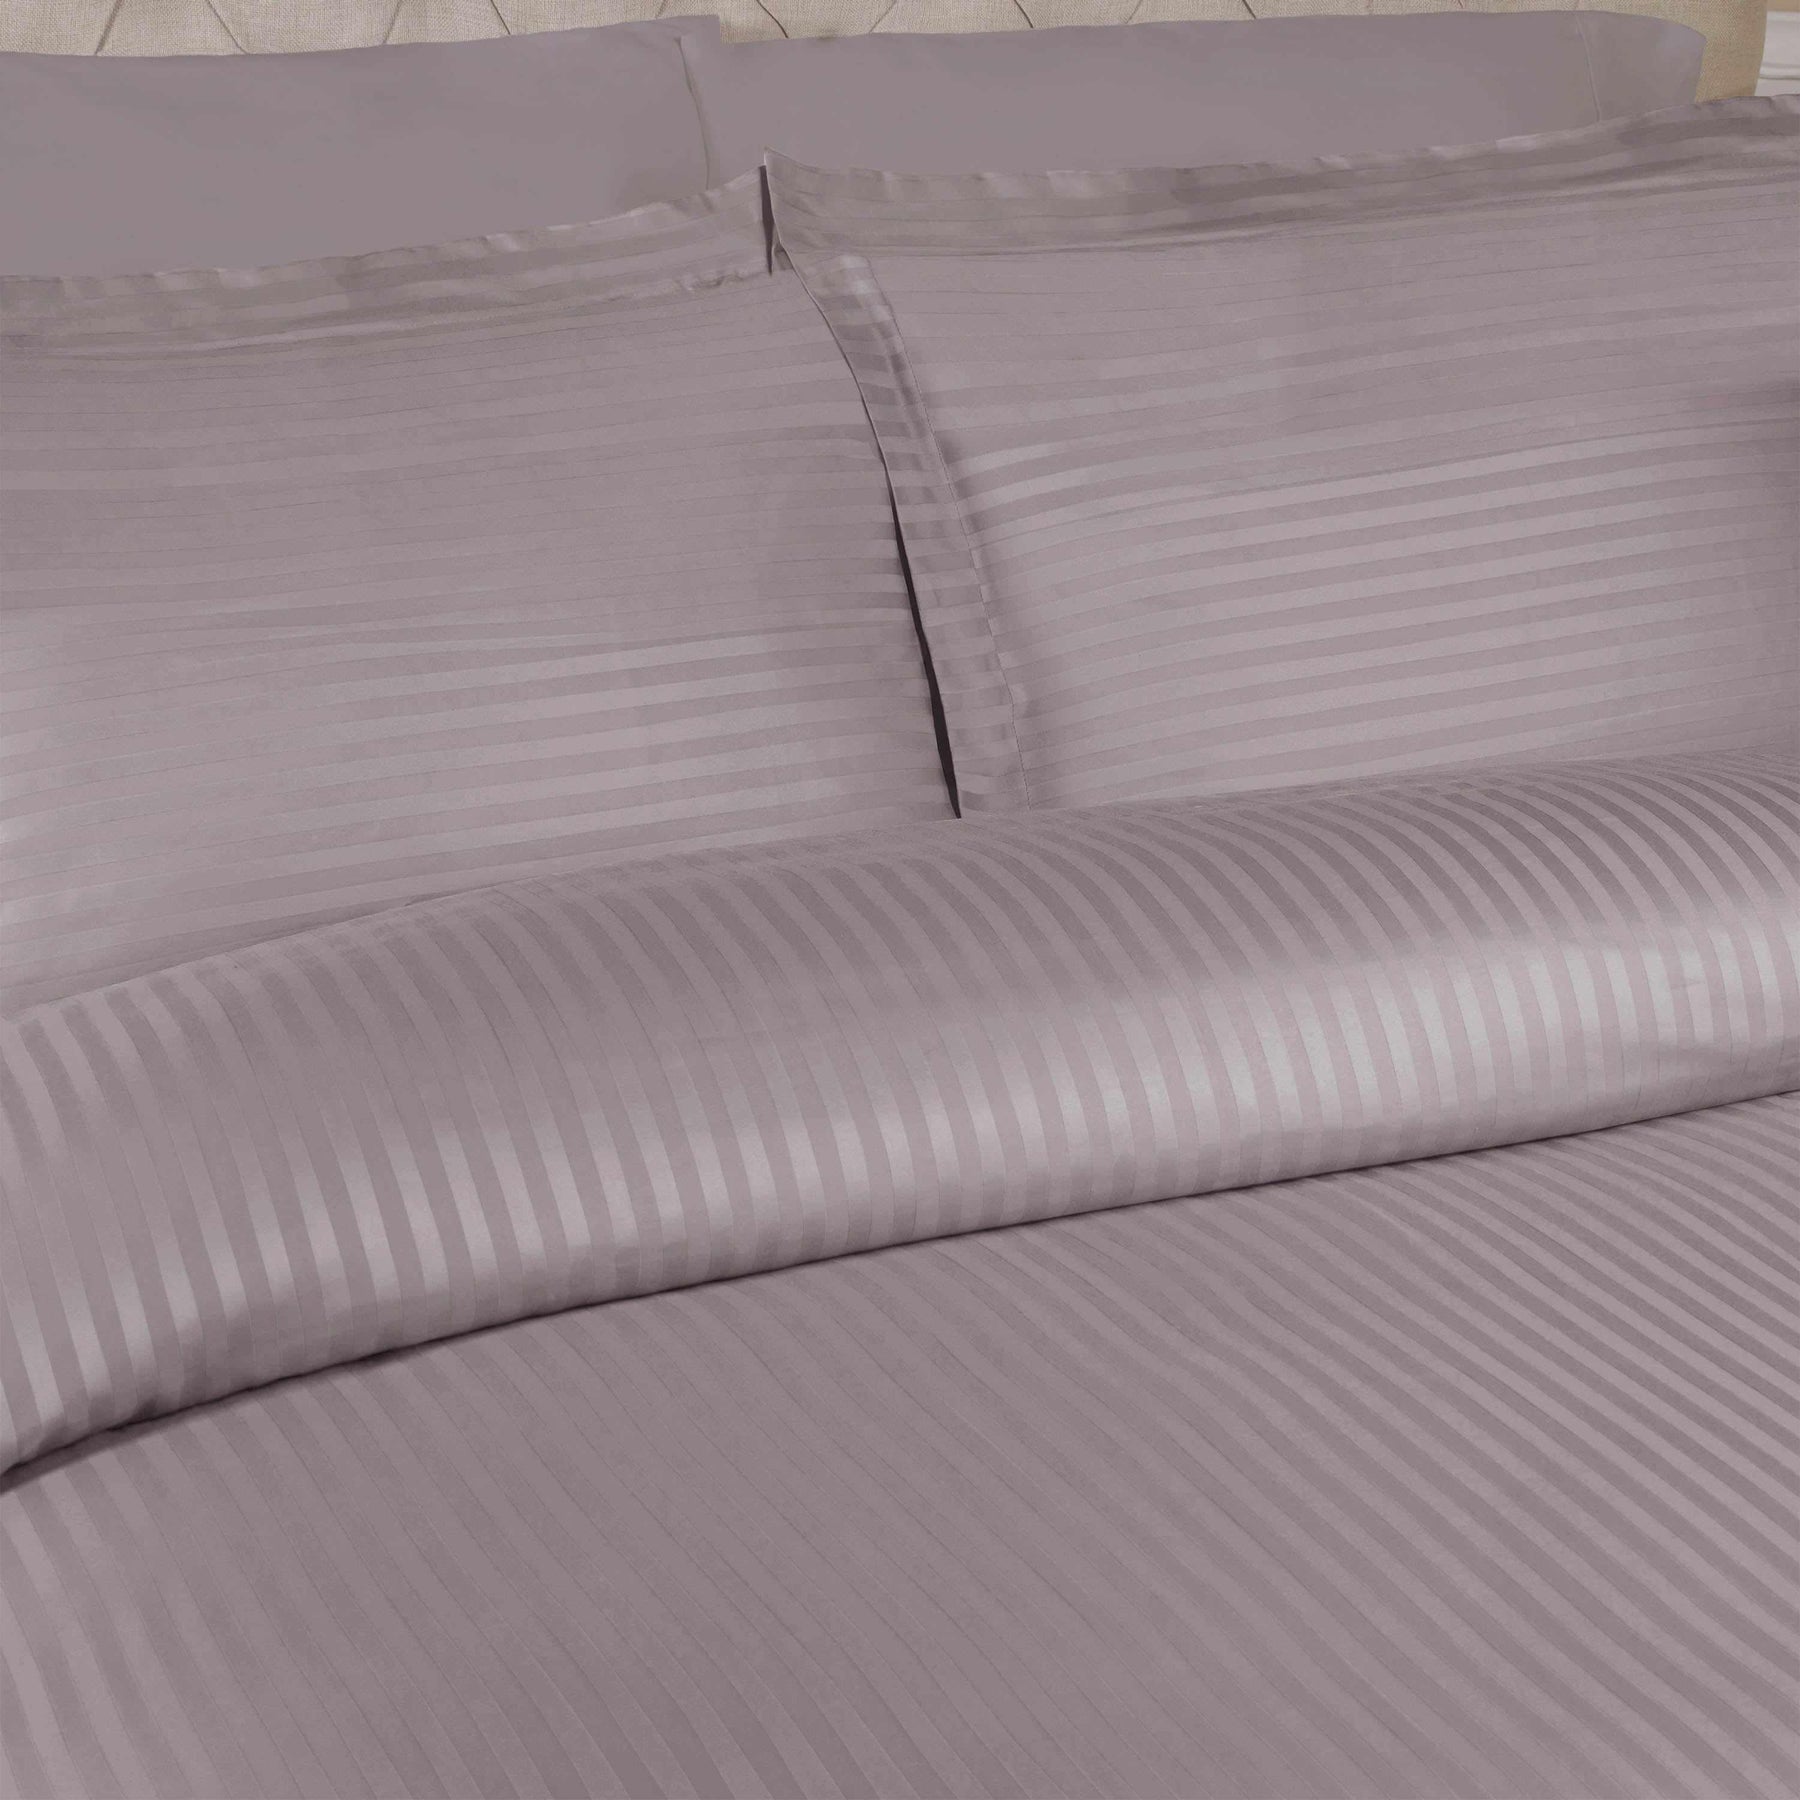 Superior 400 Thread Count Lightweight Stripe Egyptian Cotton Duvet Cover Set - Grey